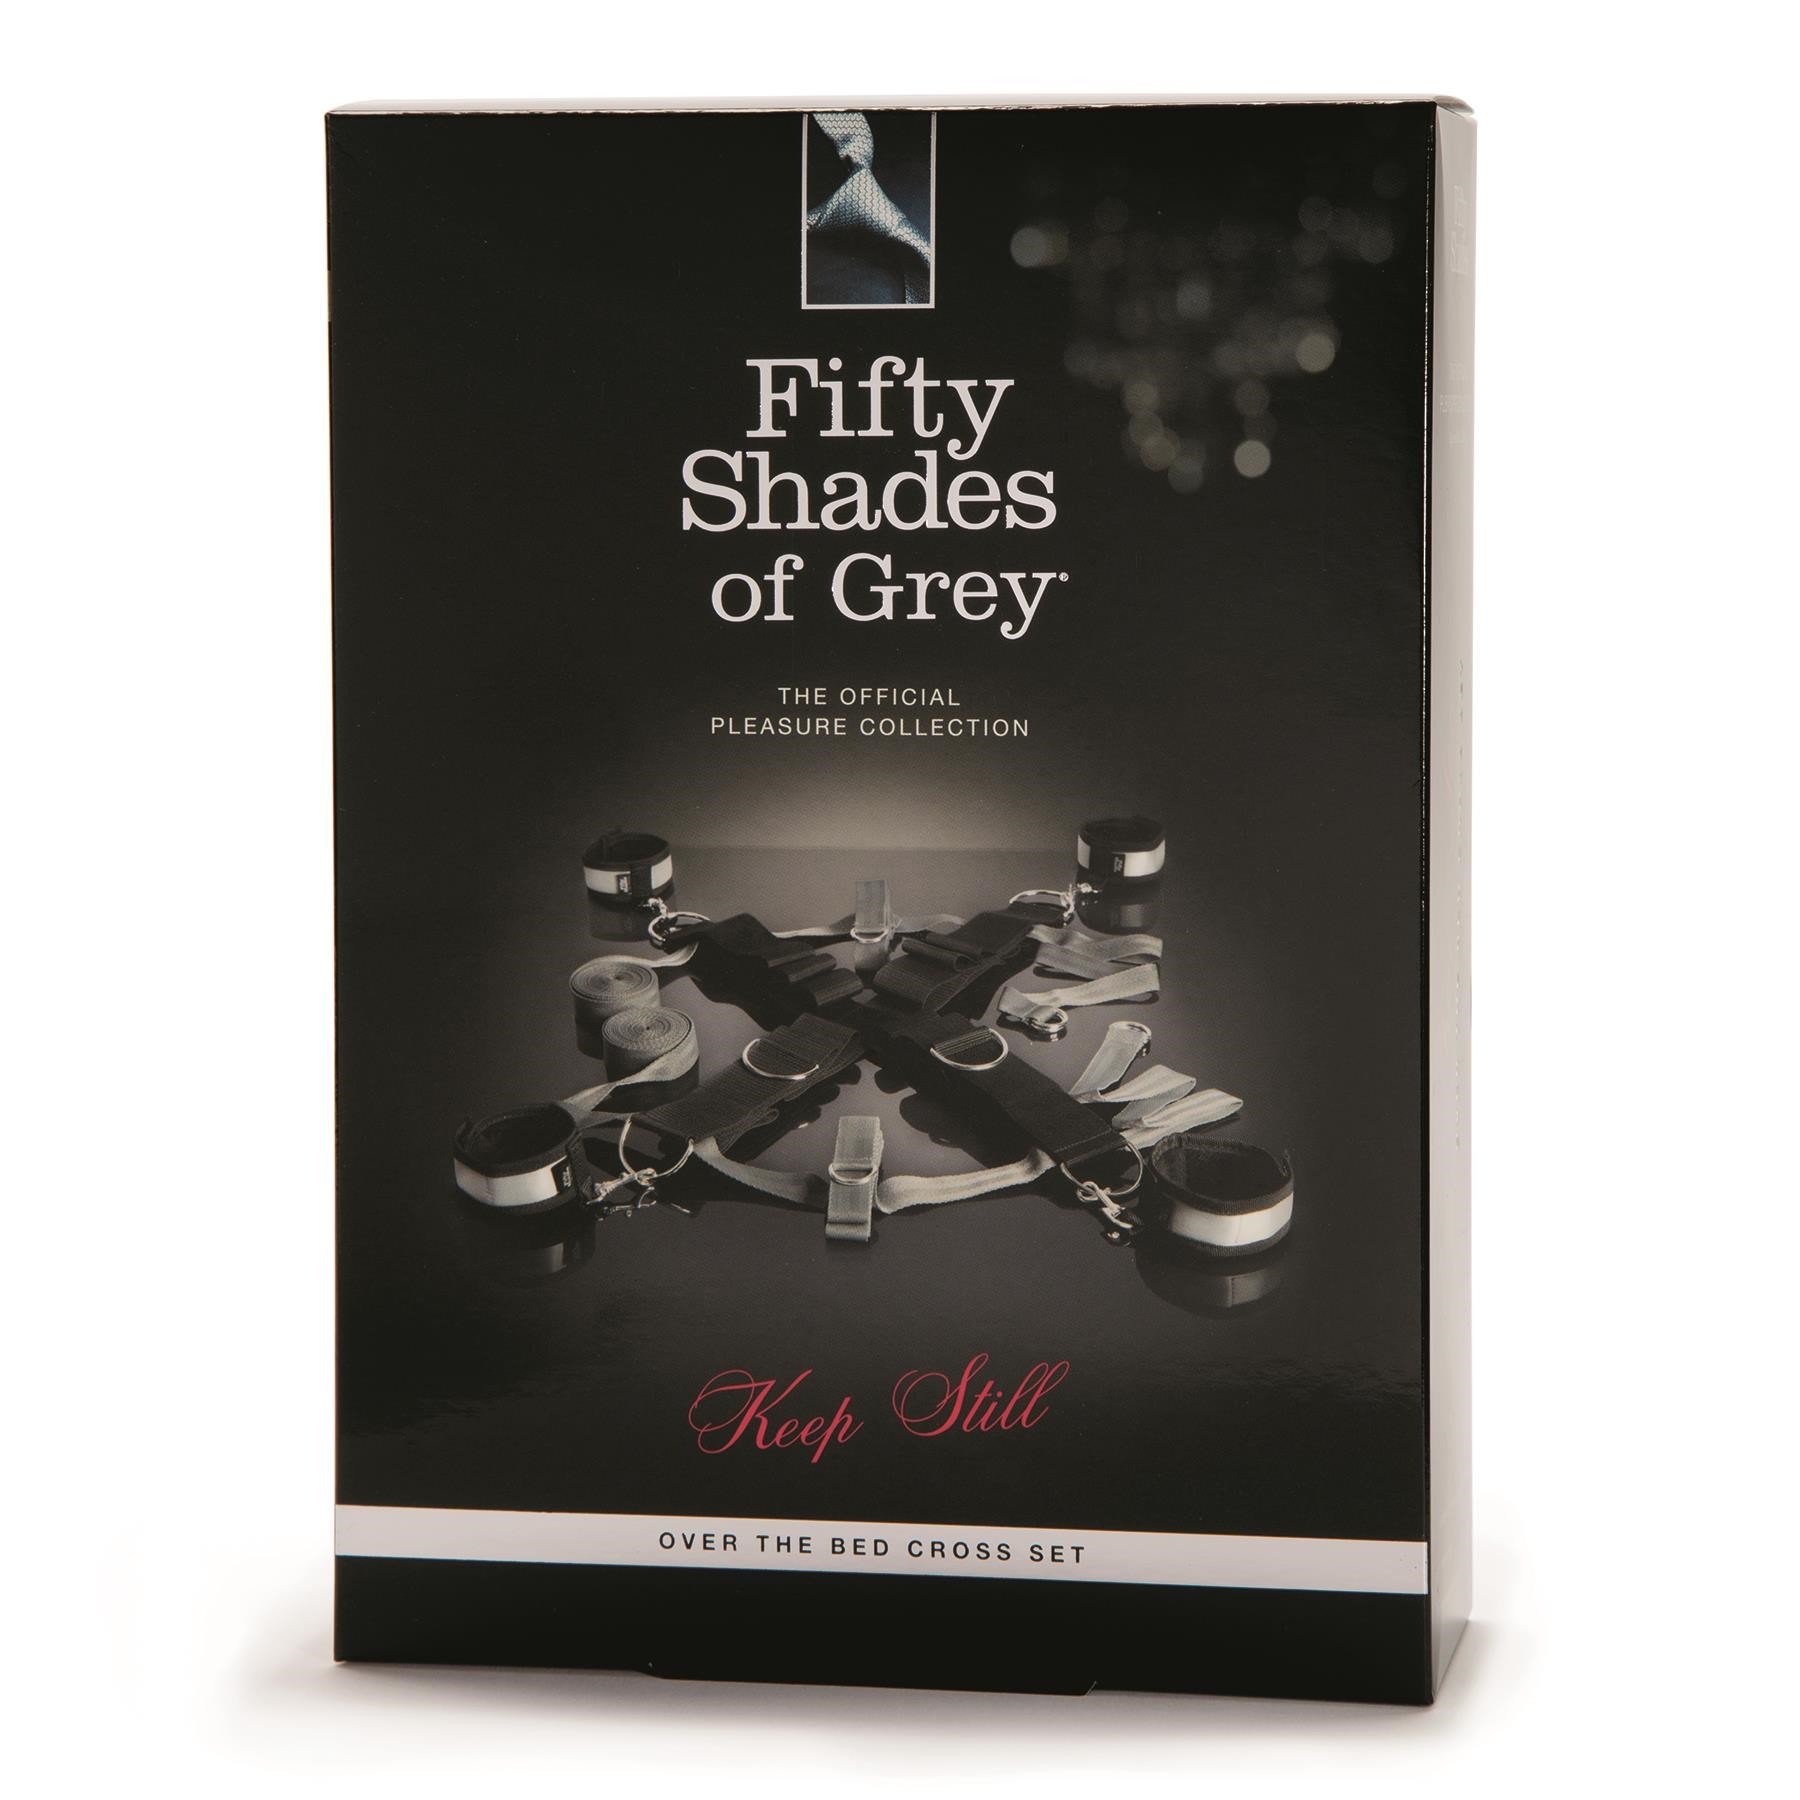 Fifty Shades of Grey Keep Fifty Shades of Grey Keep Still Over the Bed Cross Restraints Box Shot